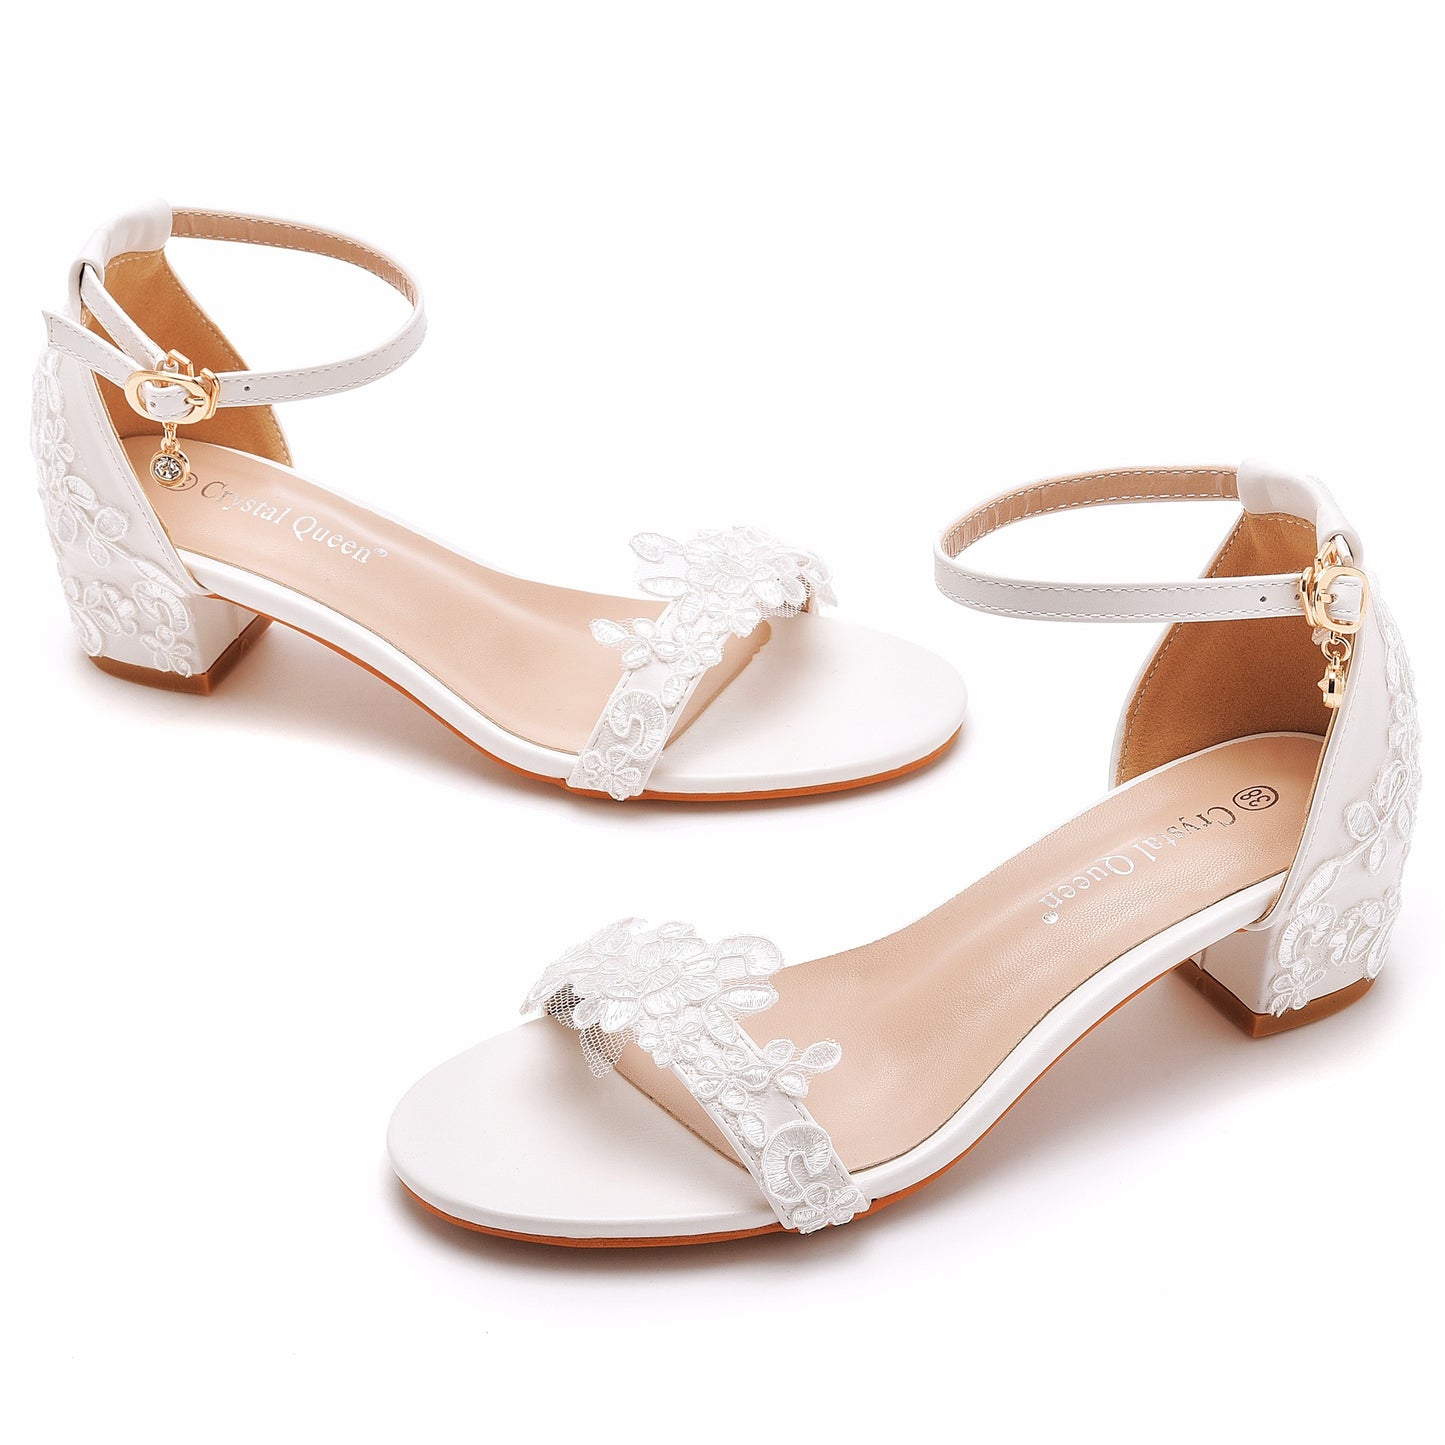 Open Toe White Lace Flowers Block Heels Ankle-Strap Pumps